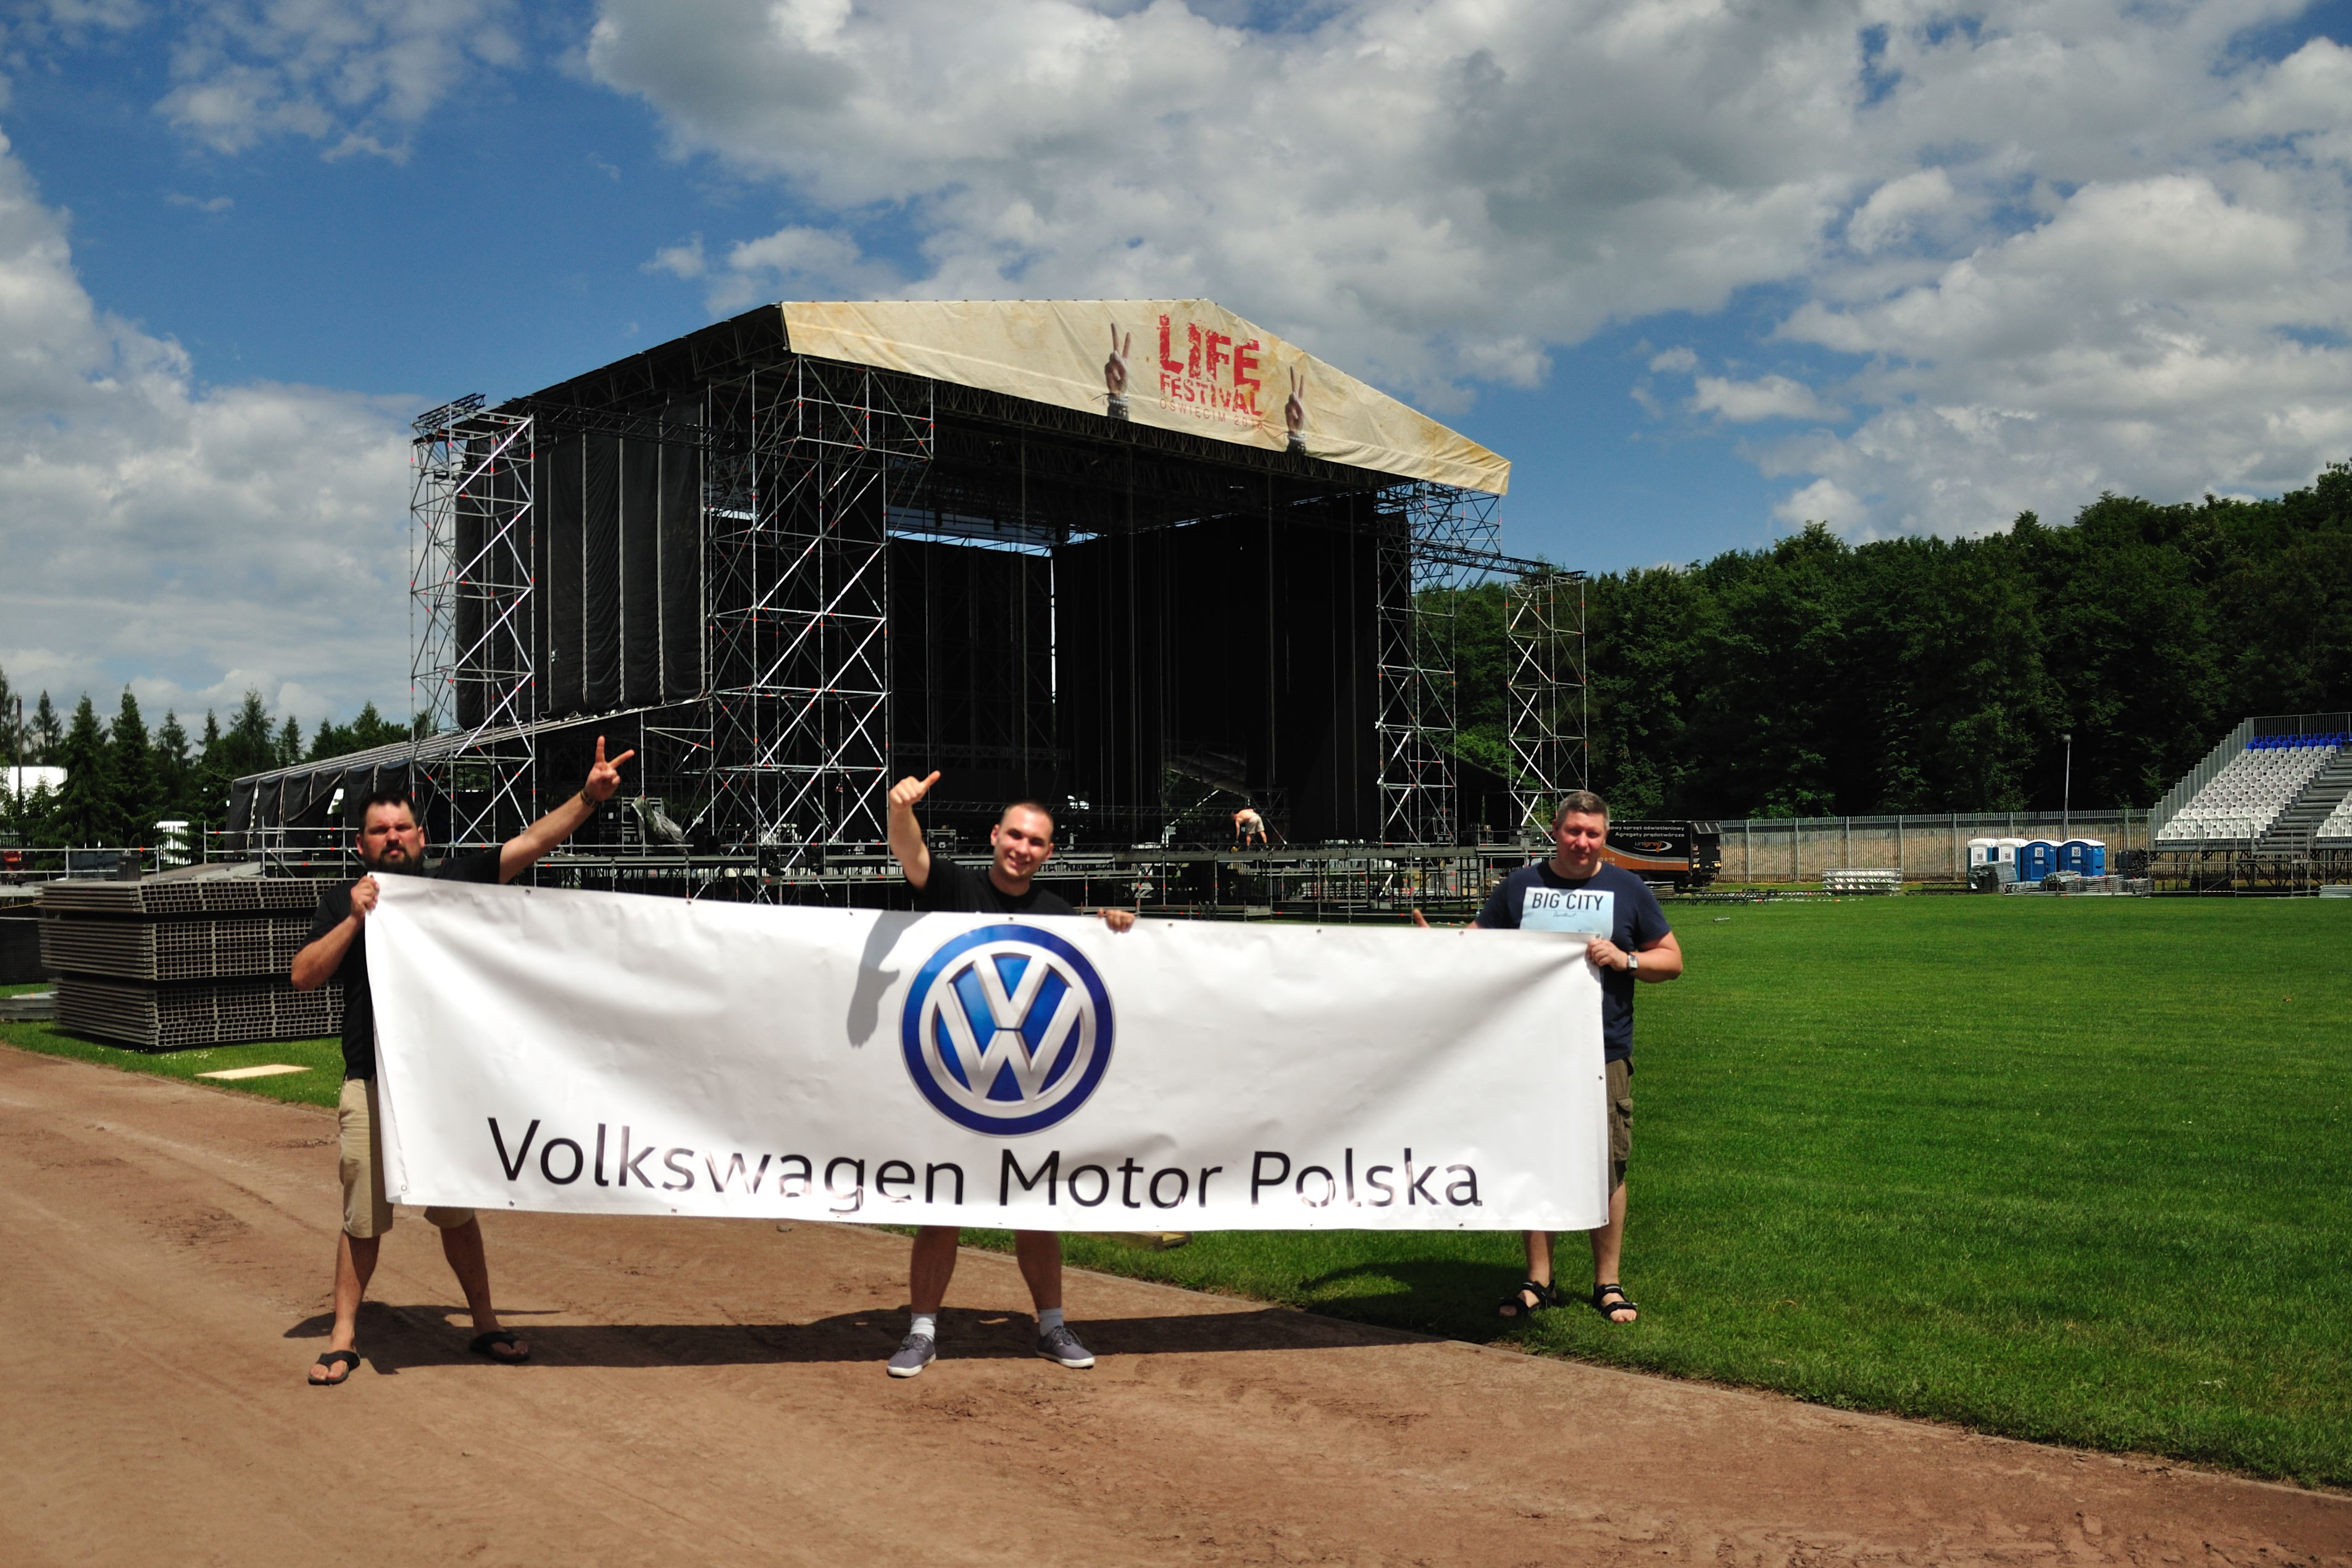 OŚWIĘCIM/POLKOWICE. Volkswagen MP ambasadorem Life Festiwal